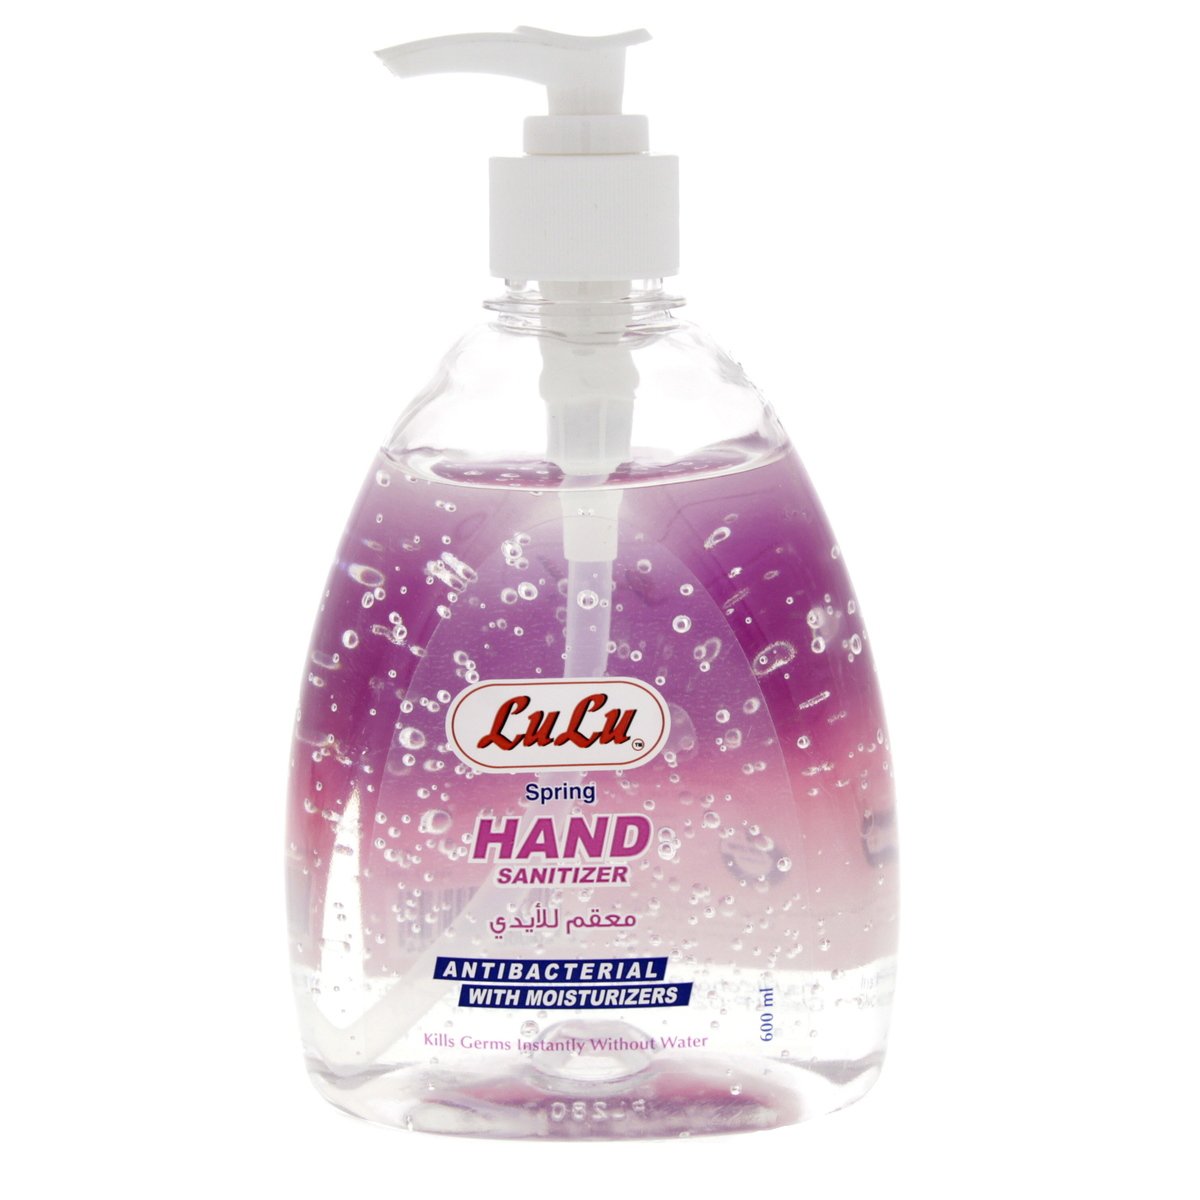 LuLu Spring Hand Sanitizer Antibacterial With Moisturizers 600ml